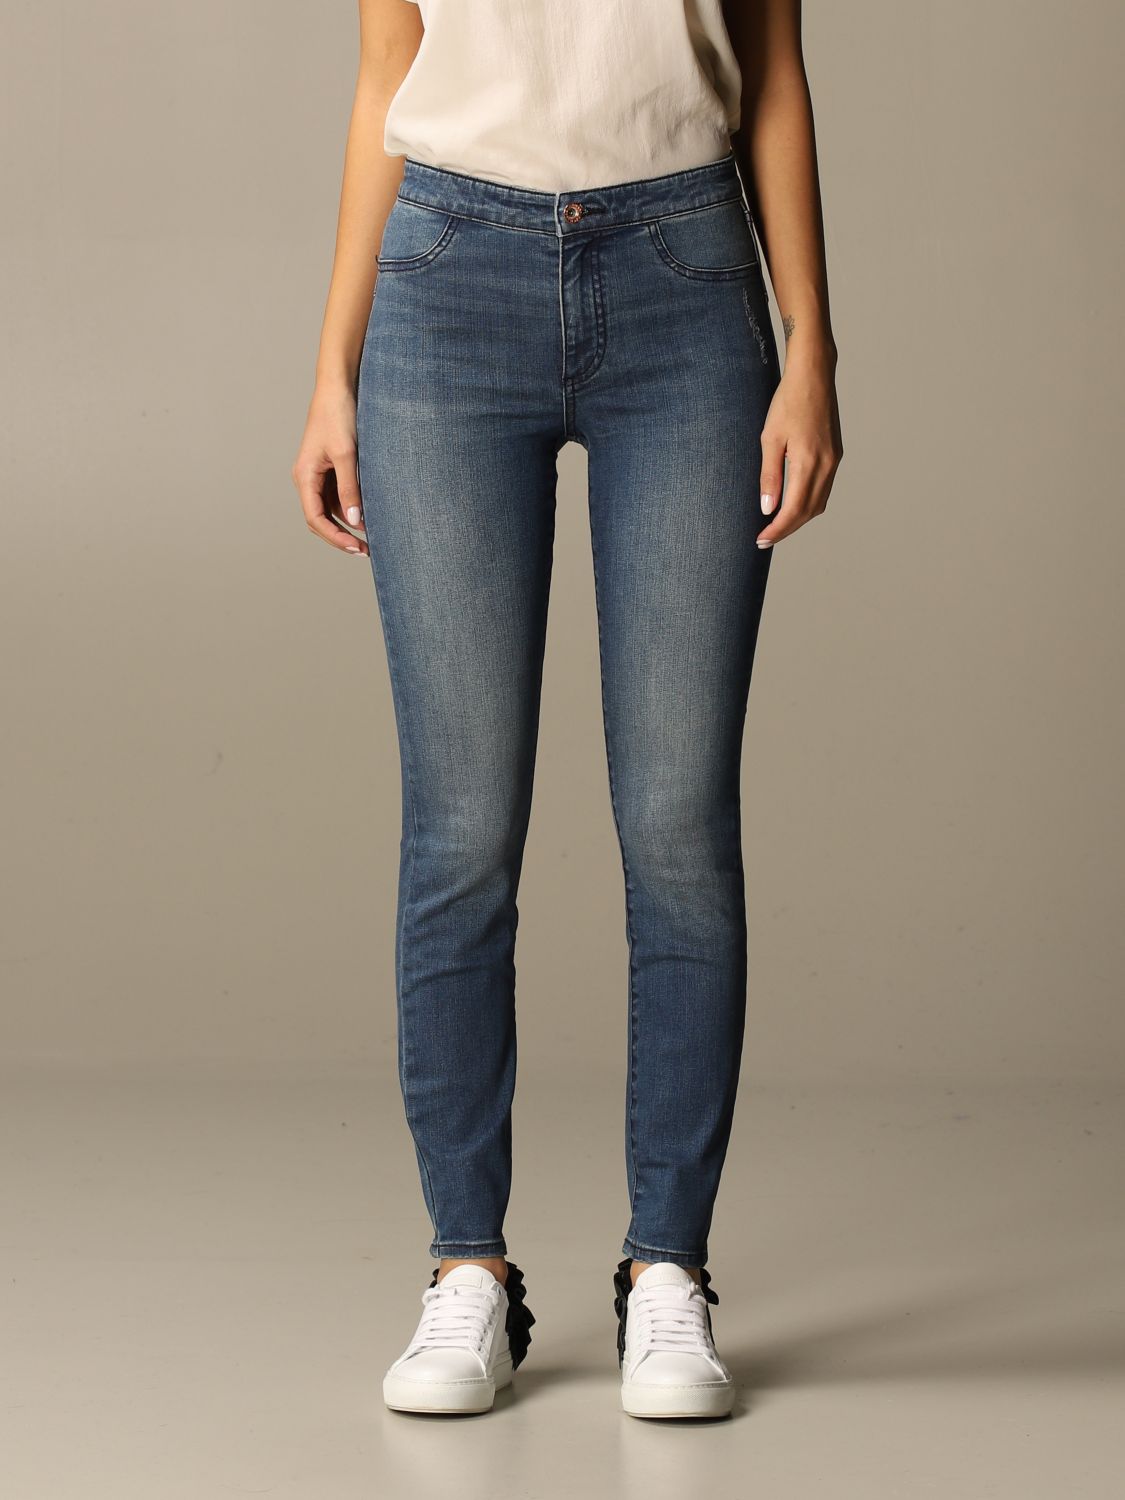 Armani Exchange Outlet: Emporio Armani jeans in skinny stretch used denim -  Denim | Armani Exchange jeans 6HYJ12 Y2RFZ online on 